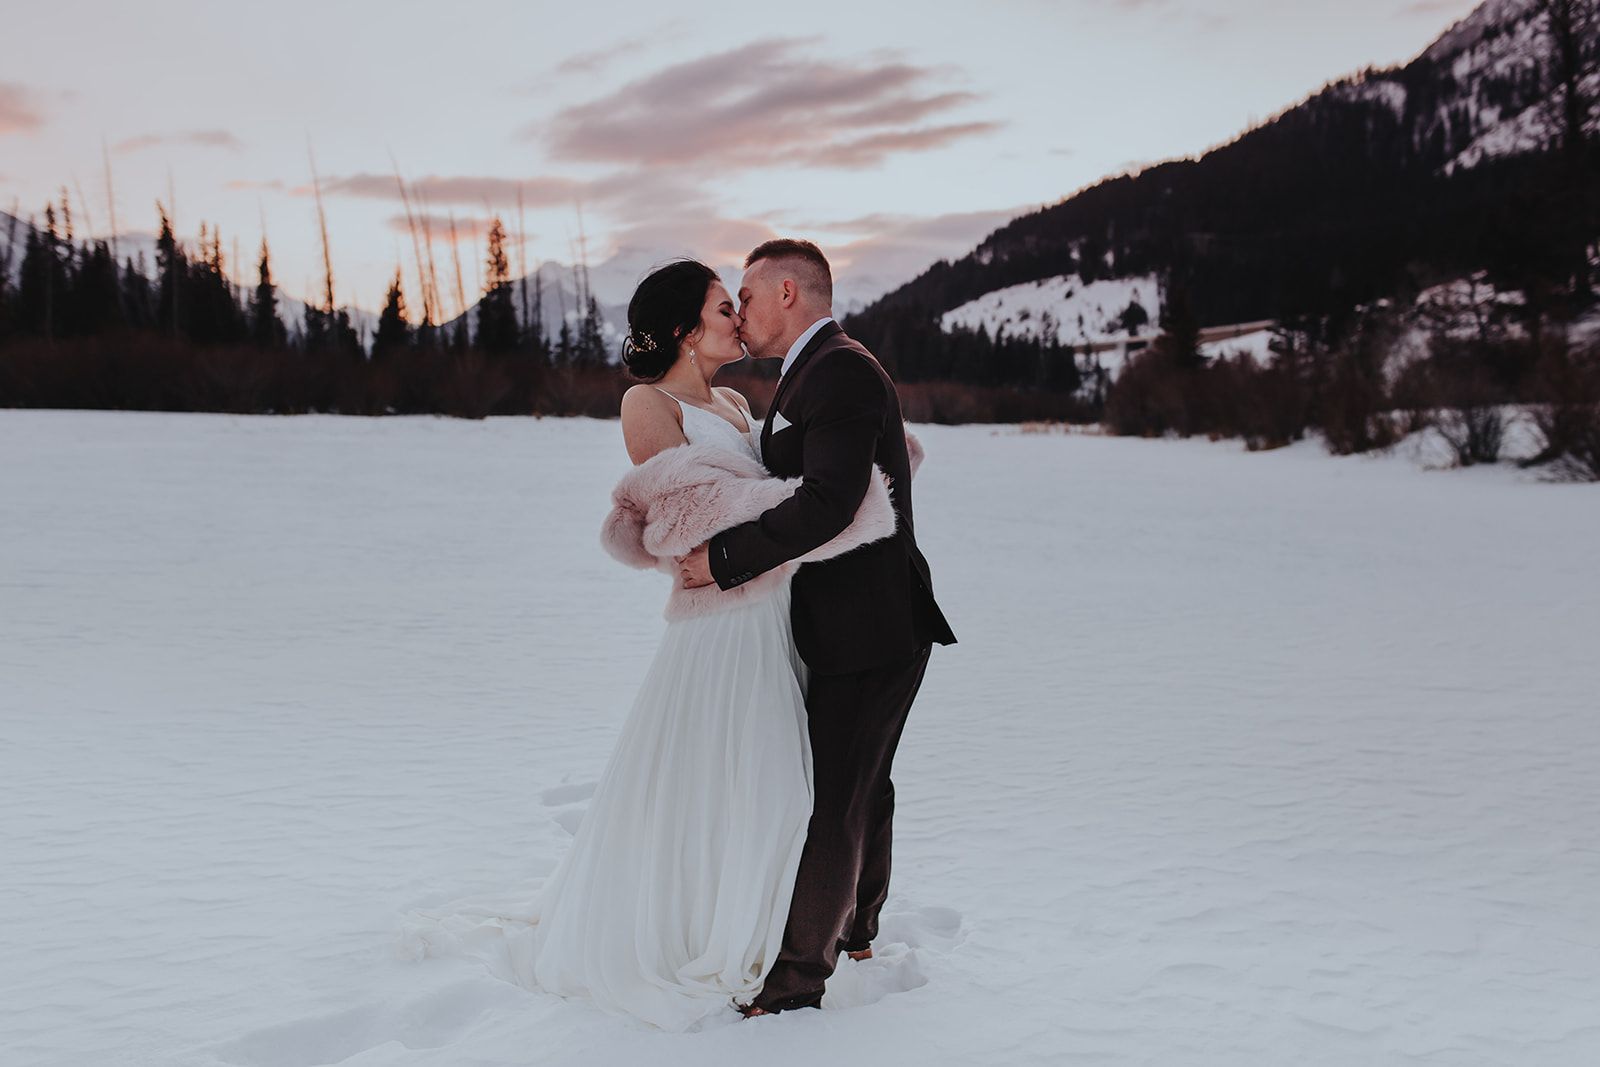 Banff Gondola, Rocky Mountain Wedding Inspiration - winter wedding